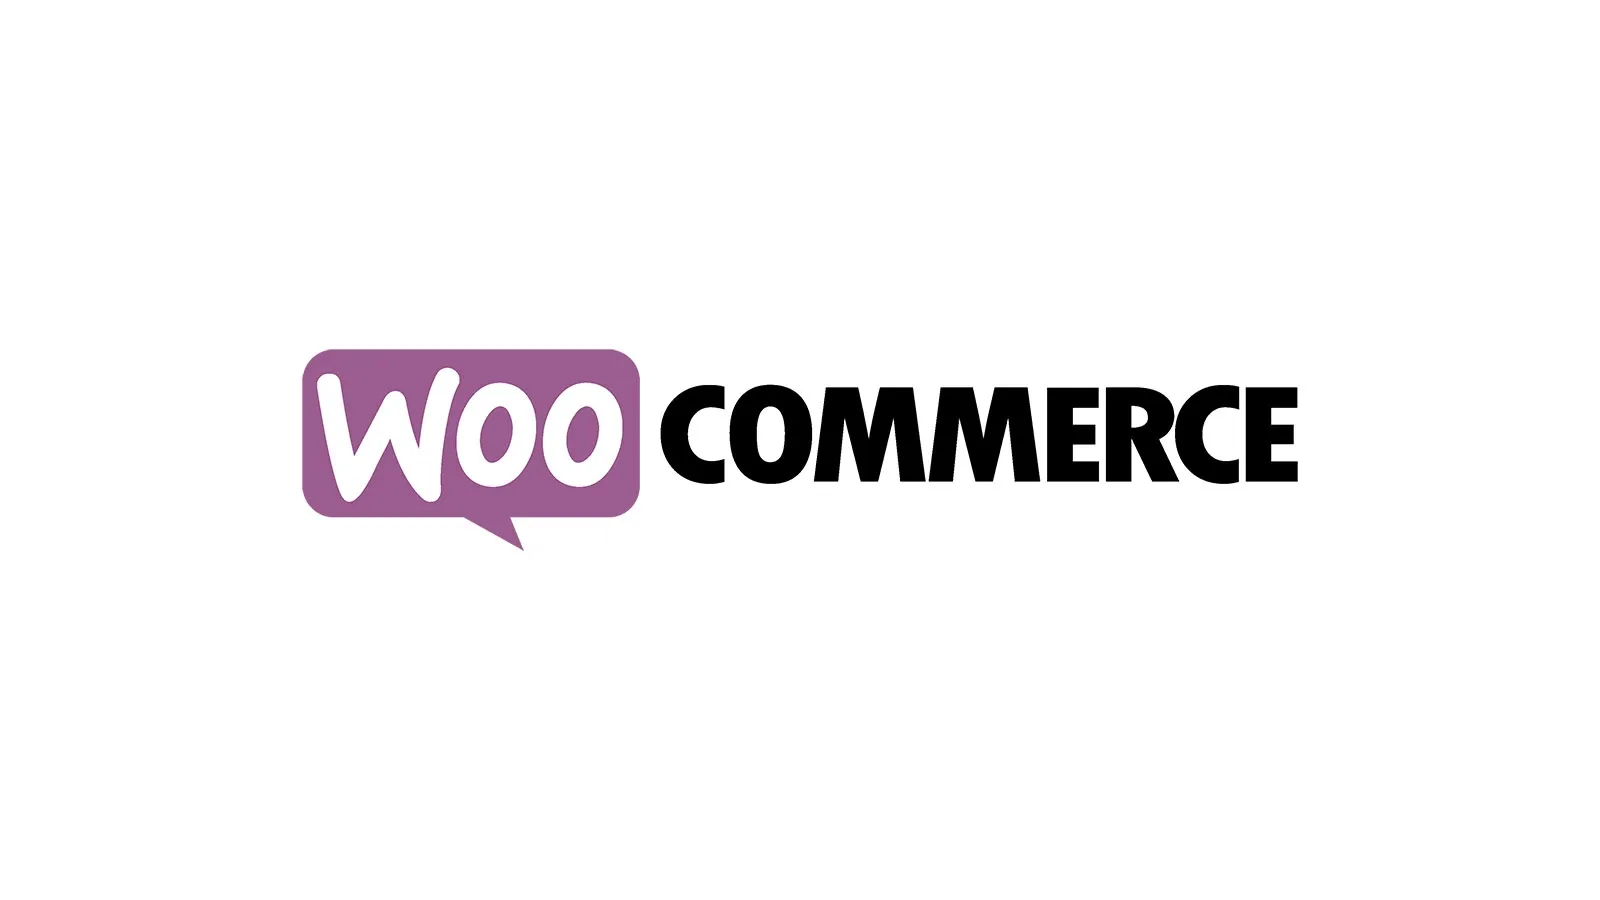 WordPress woo-commerce error problem solve